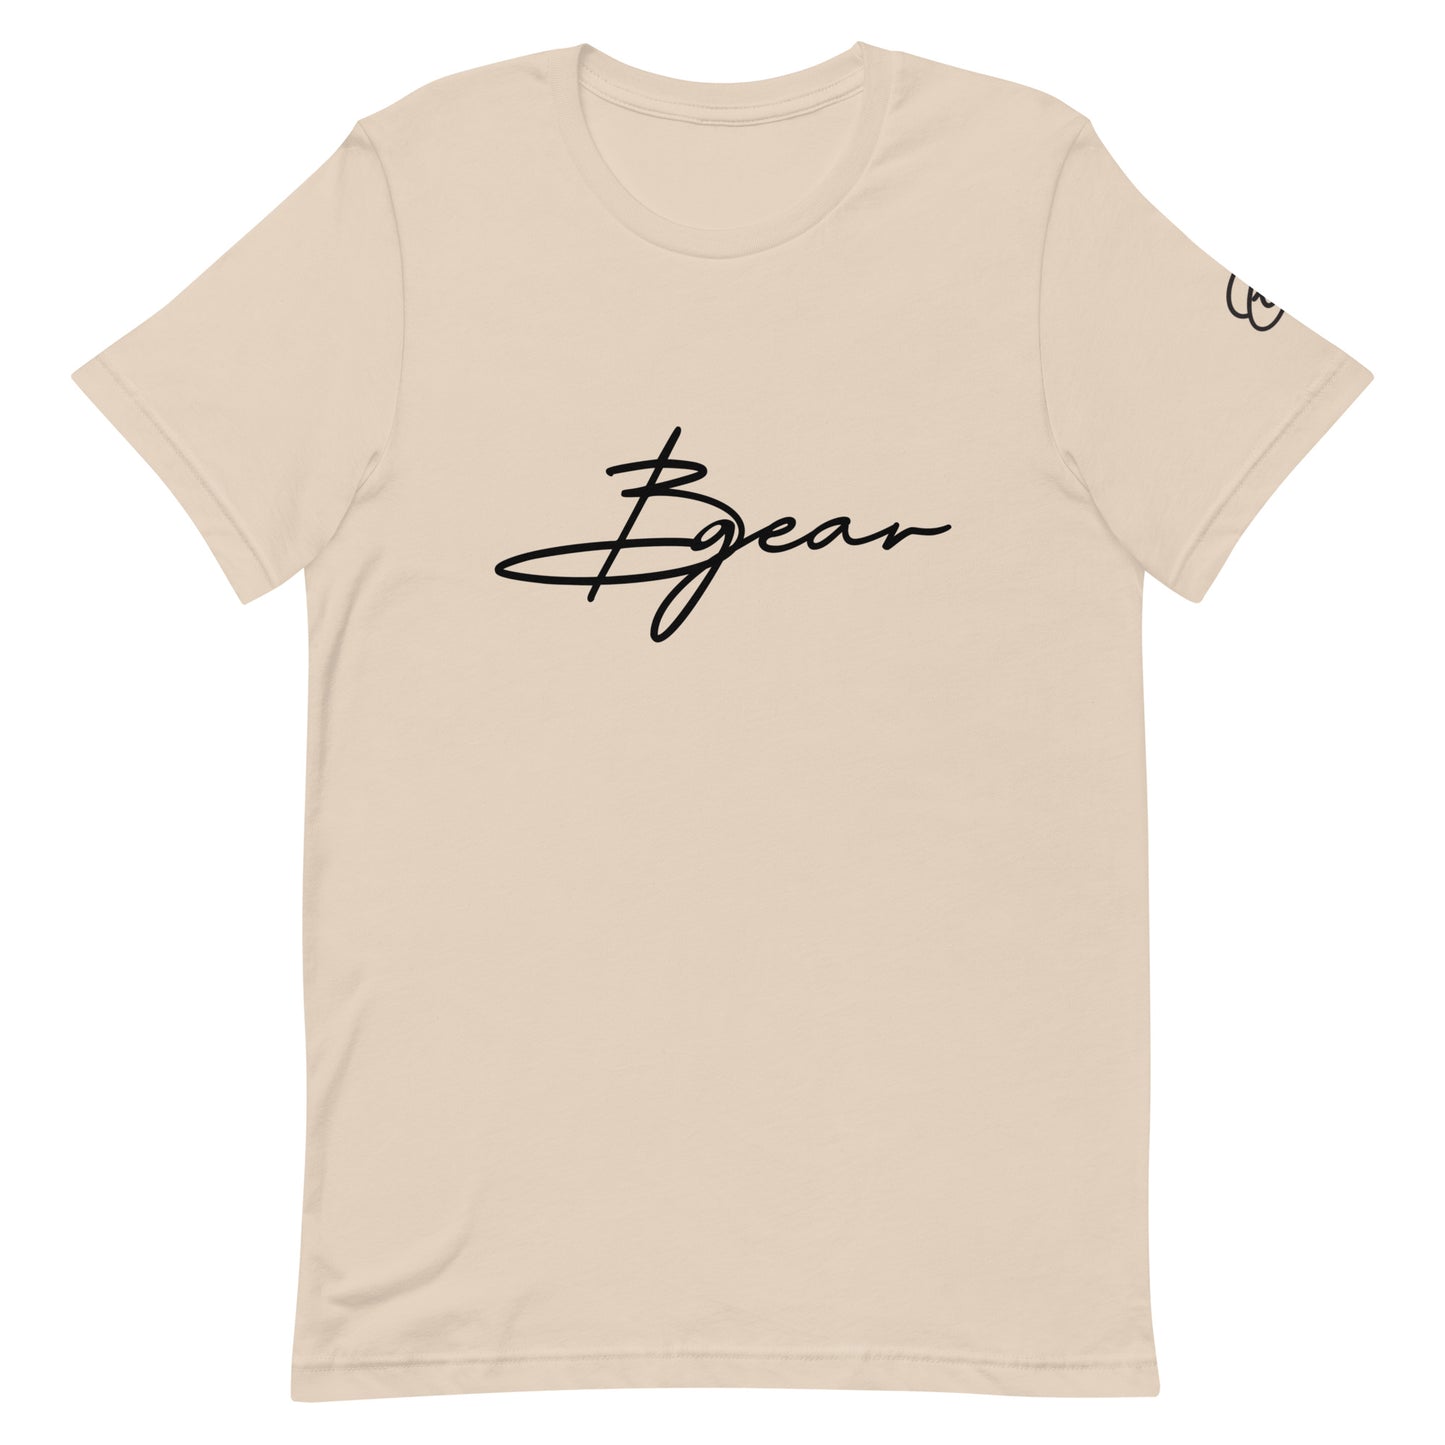 BGear Signature T Shirt -  Unisex